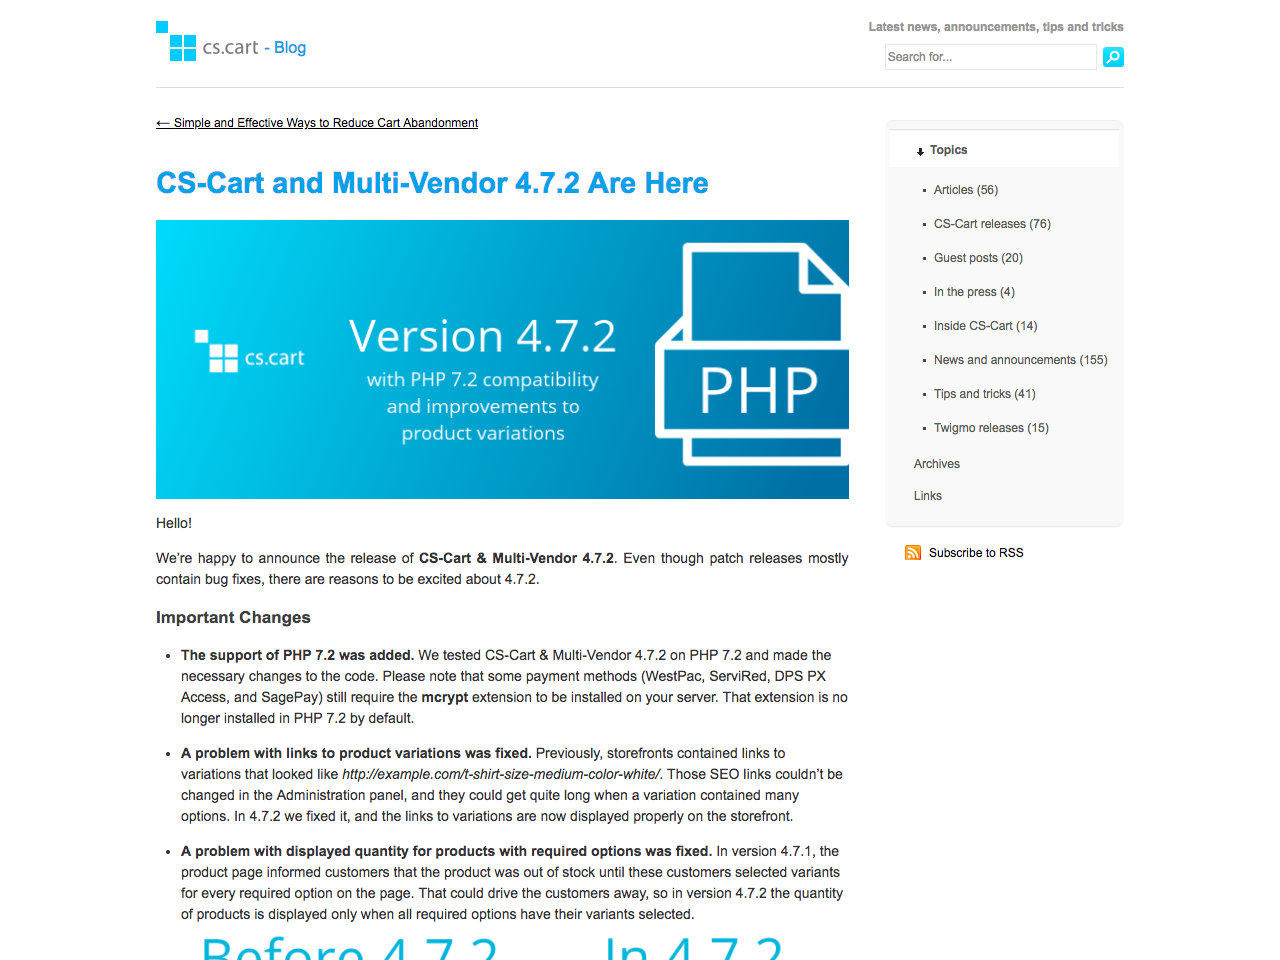 CS-Cart and Multi-Vendor 4.7.2